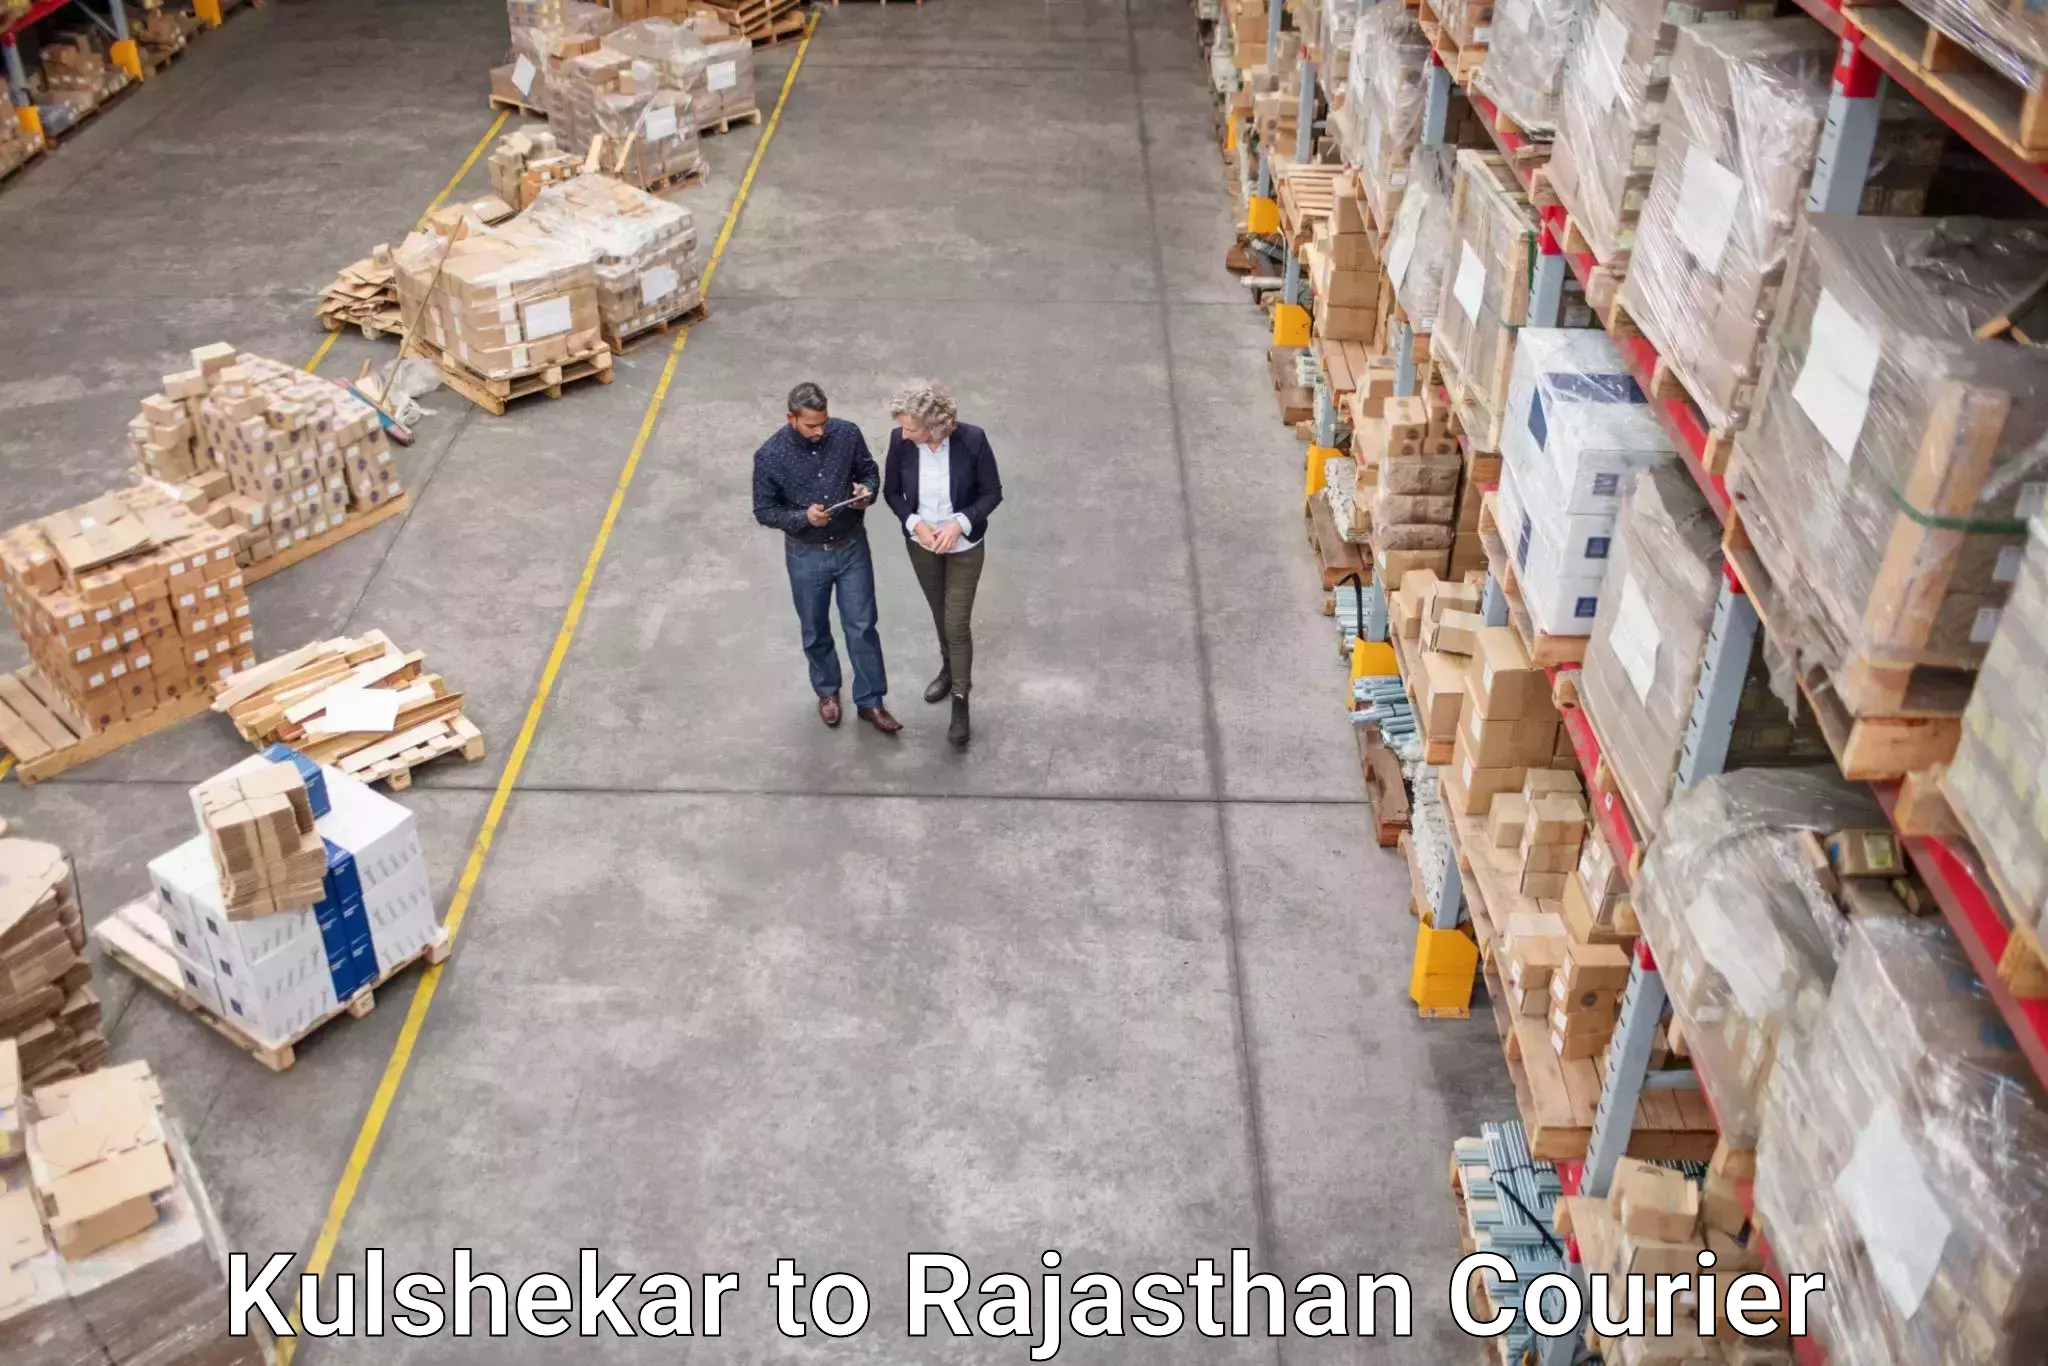 Courier service comparison Kulshekar to Degana